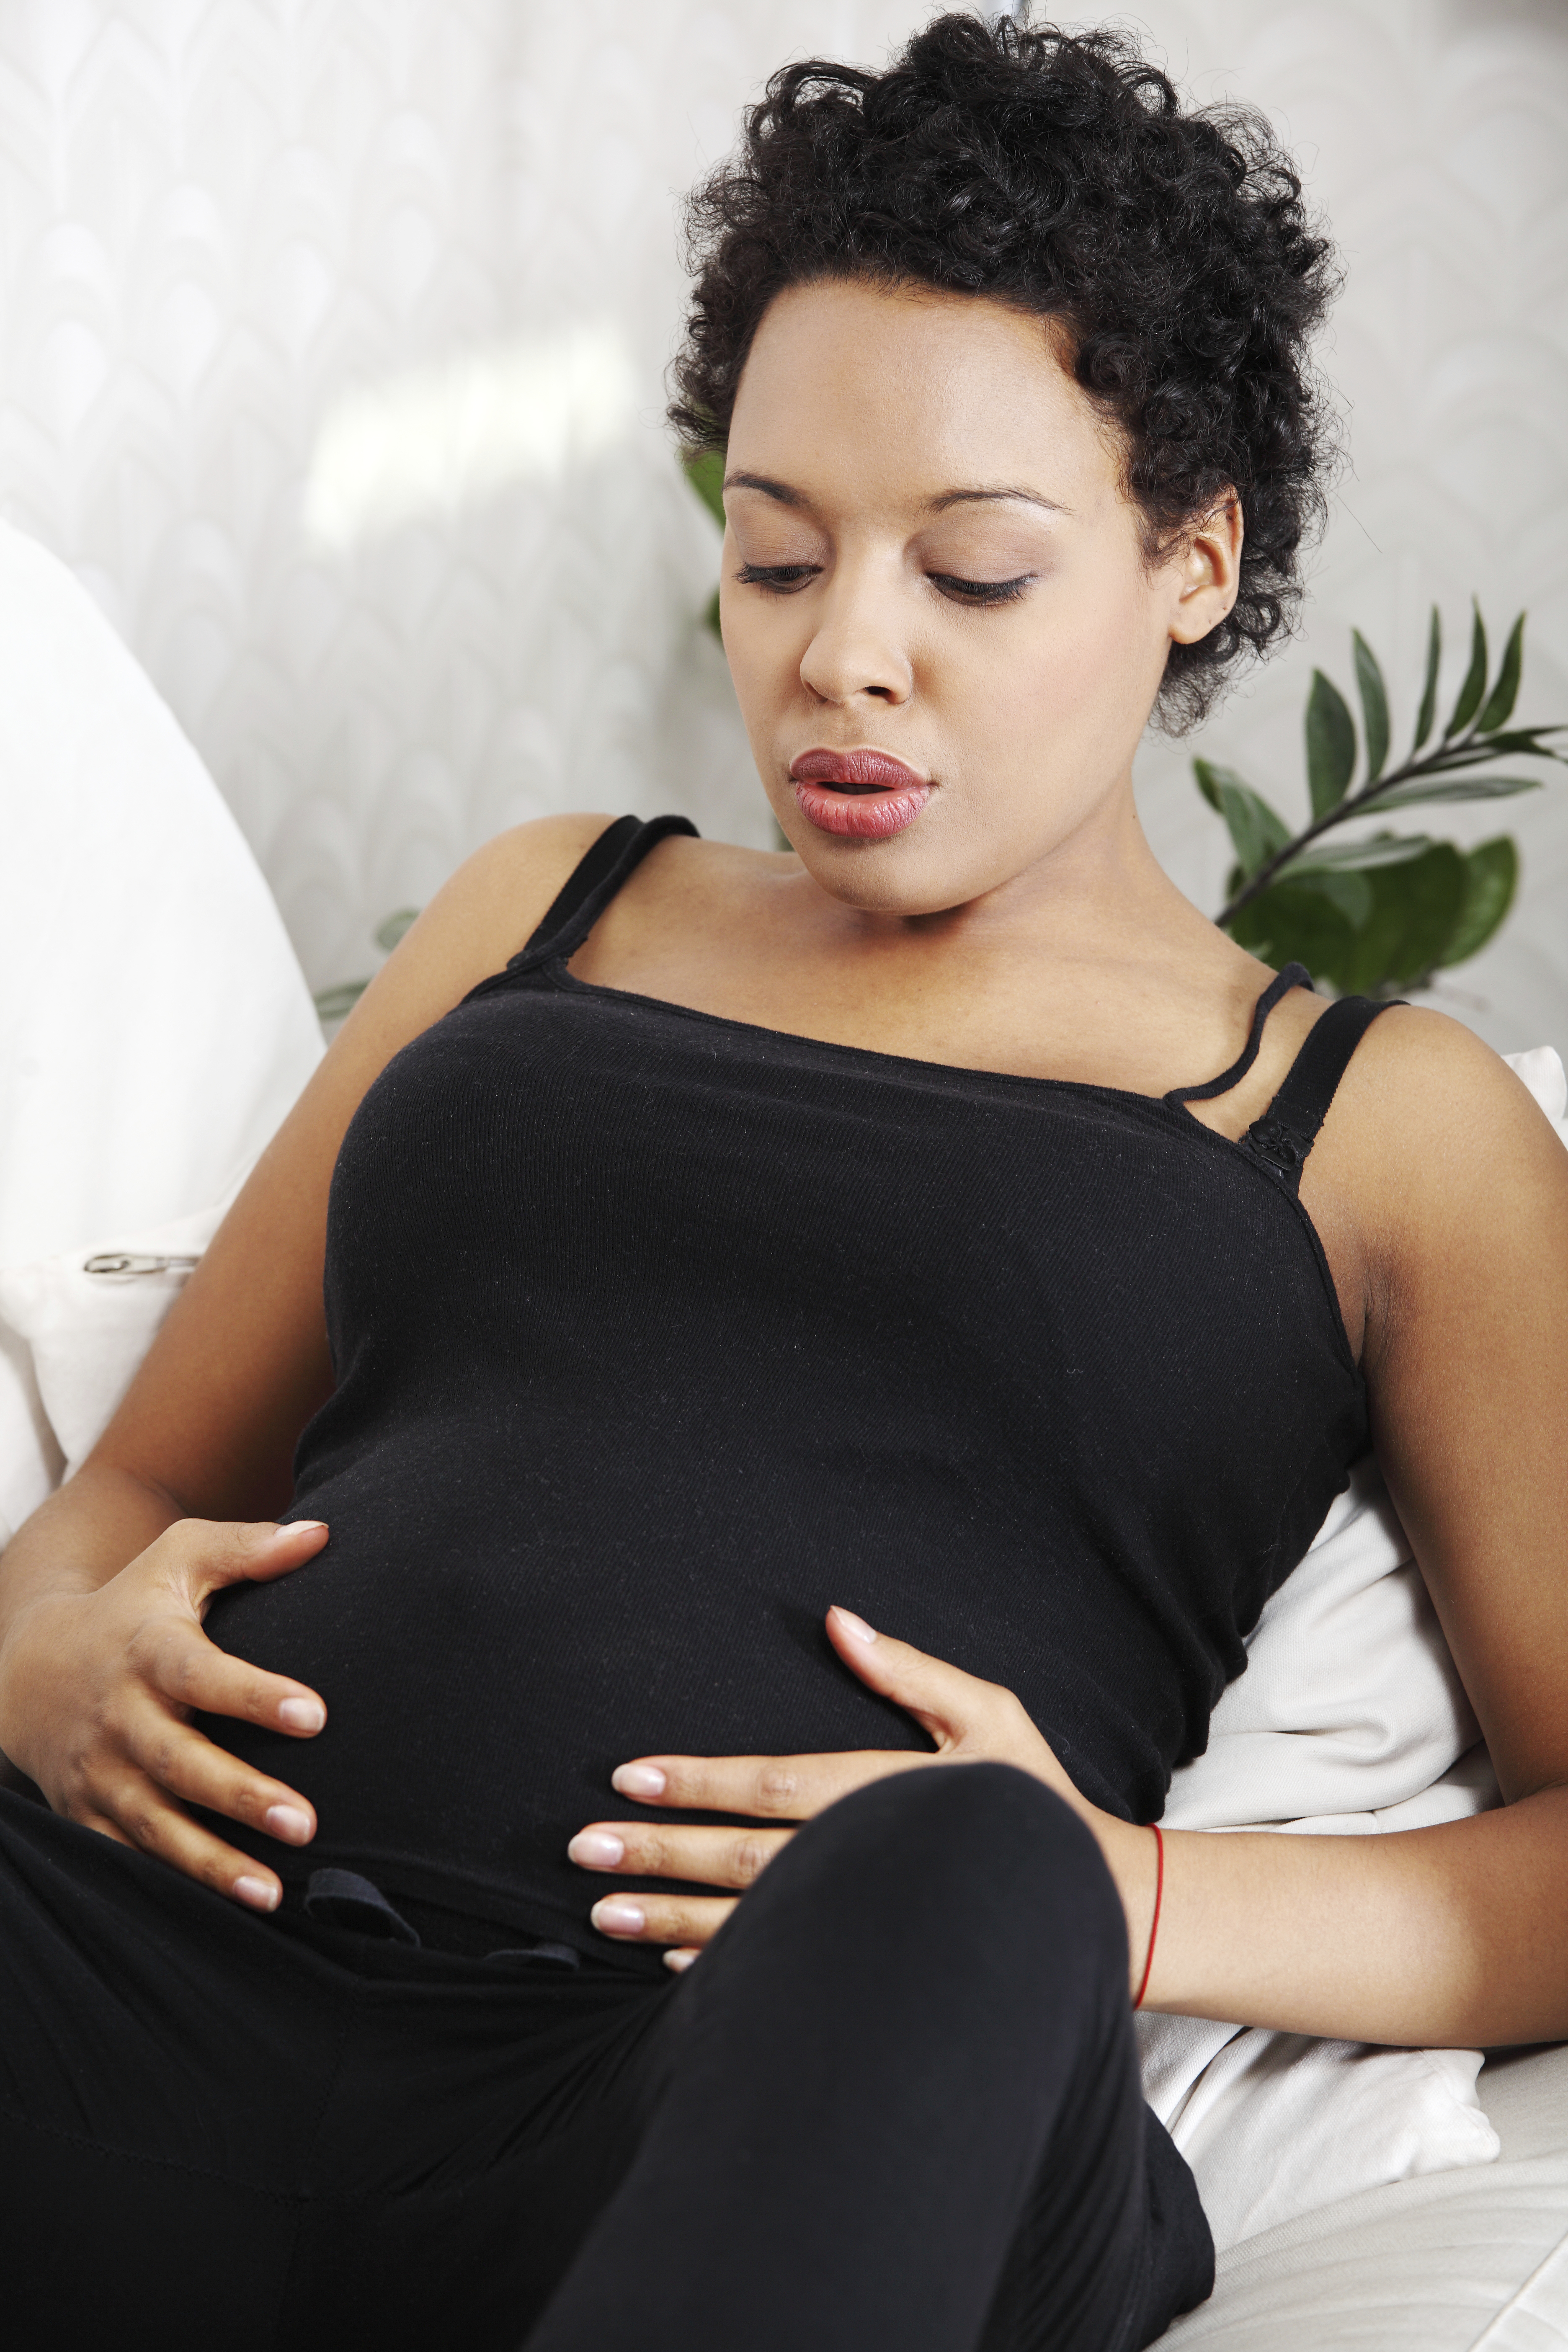 Pregnant women breathing